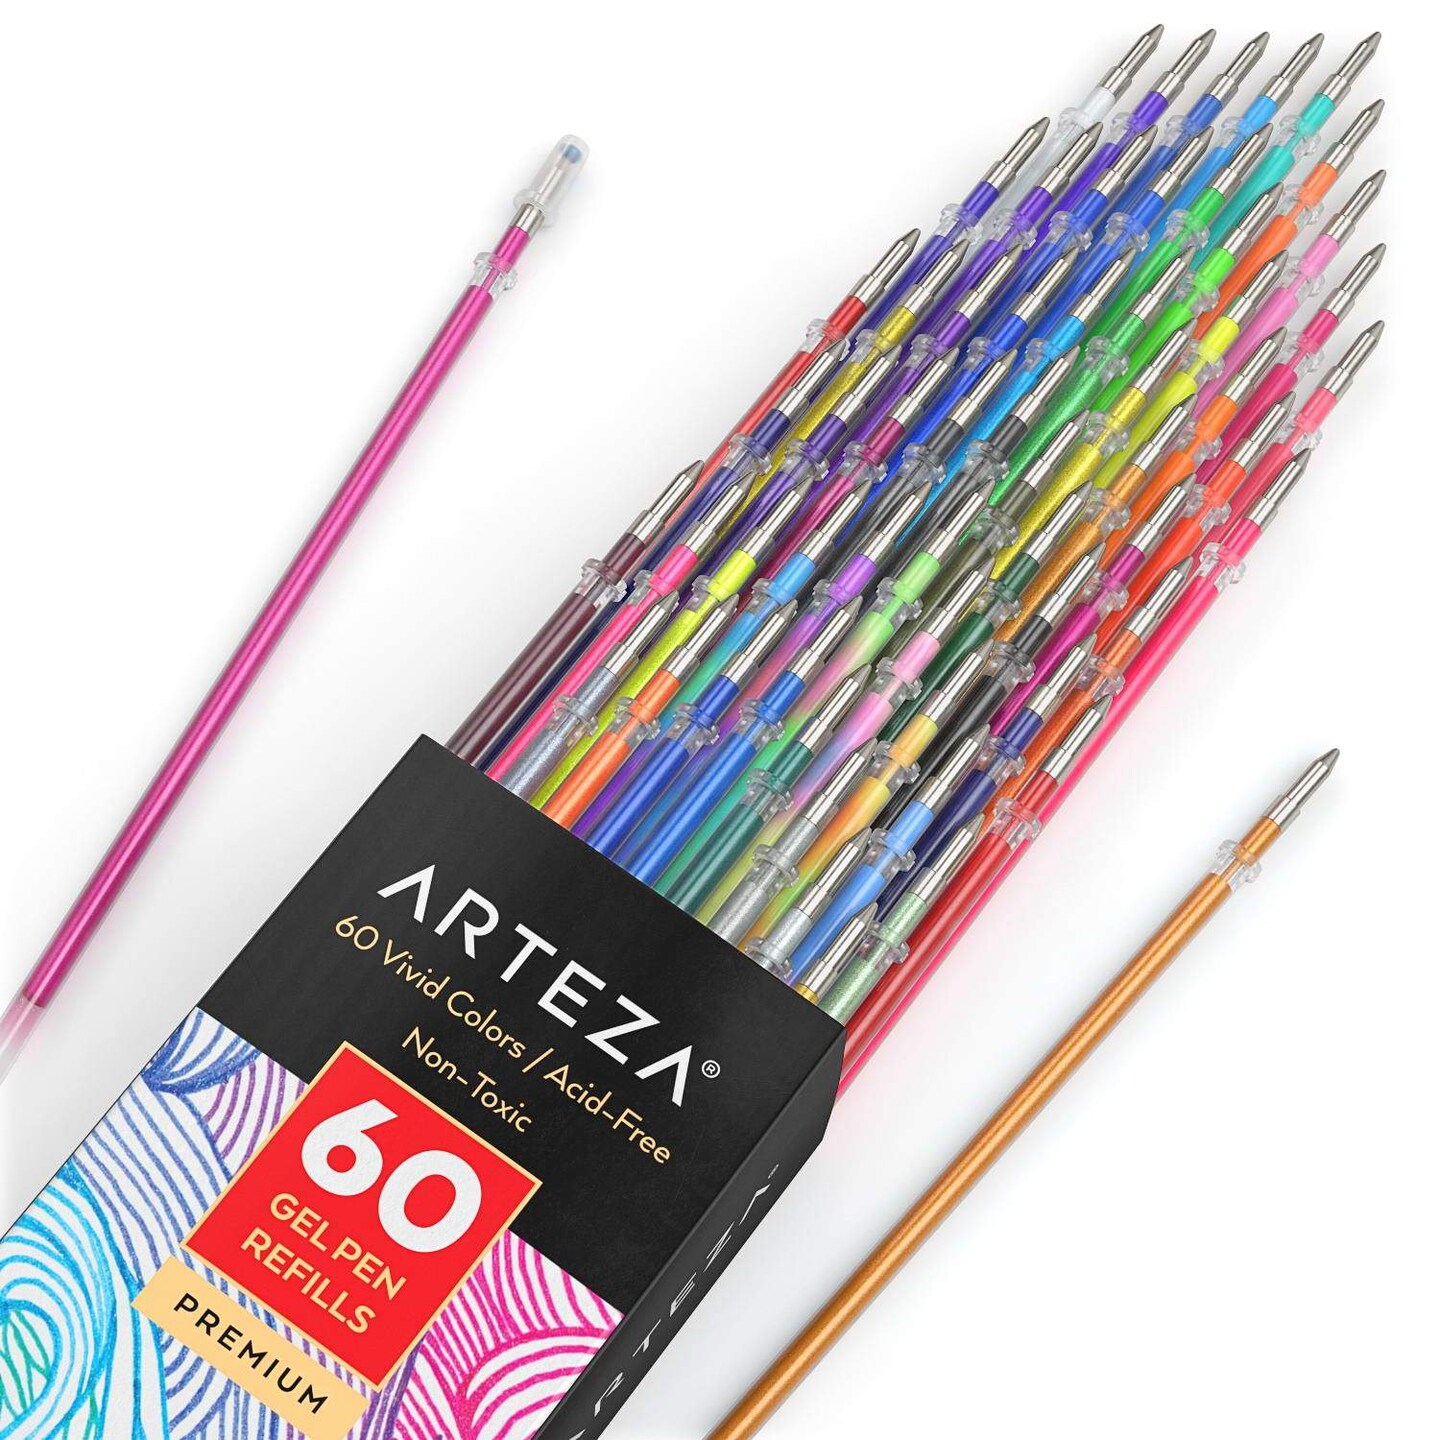 Arteza Coloring Set - 14 Glitter Gel Pens and a Black Paper Sketch Pad  Bundle (30 Sheets of Drawing Paper) Bundle